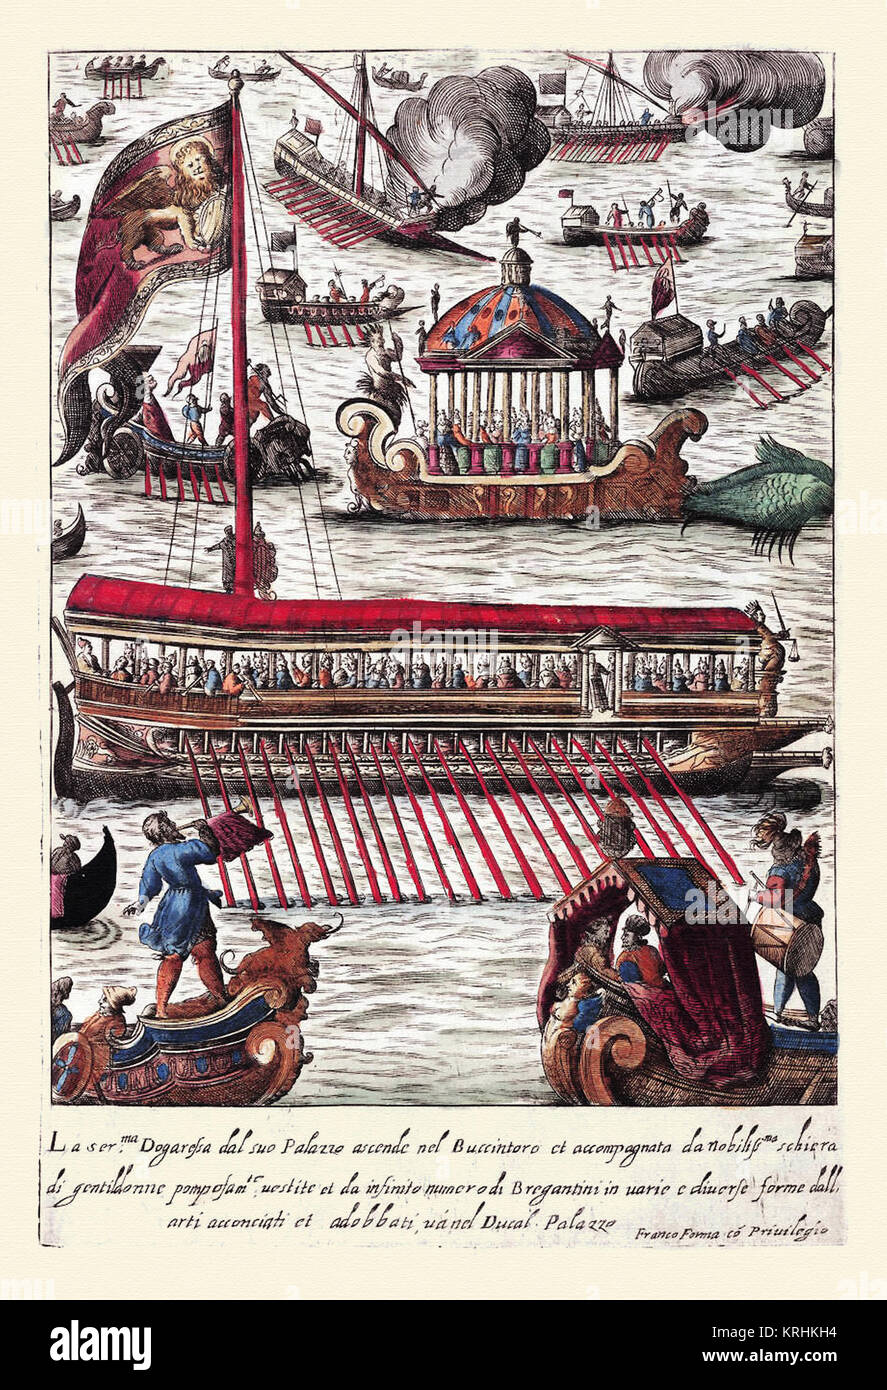 La Dogaresa de Venecia acompañada de su sequito-Habiti d’hvomeni et donne venetiane 1609 Stock Photo